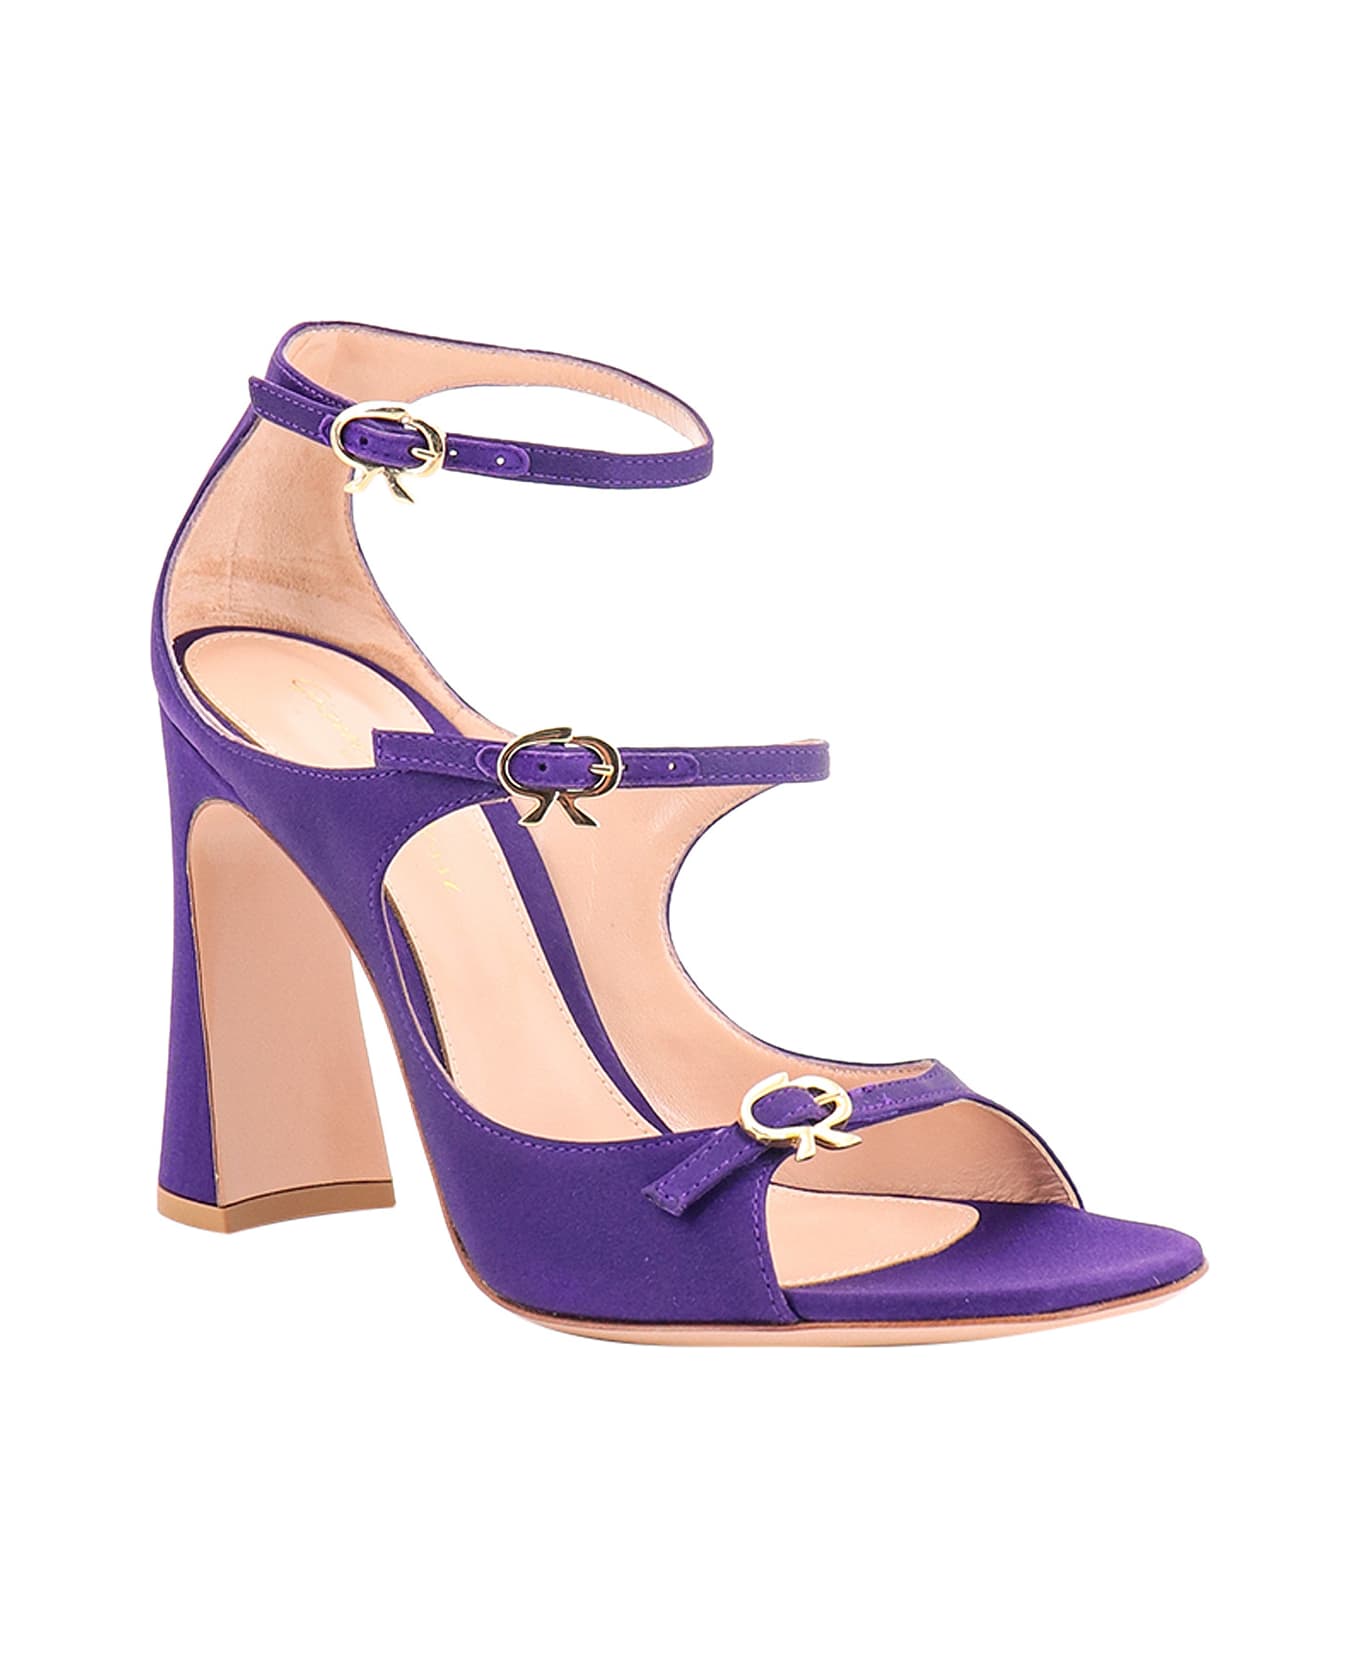 Gianvito Rossi Misty Sandals - Purple サンダル